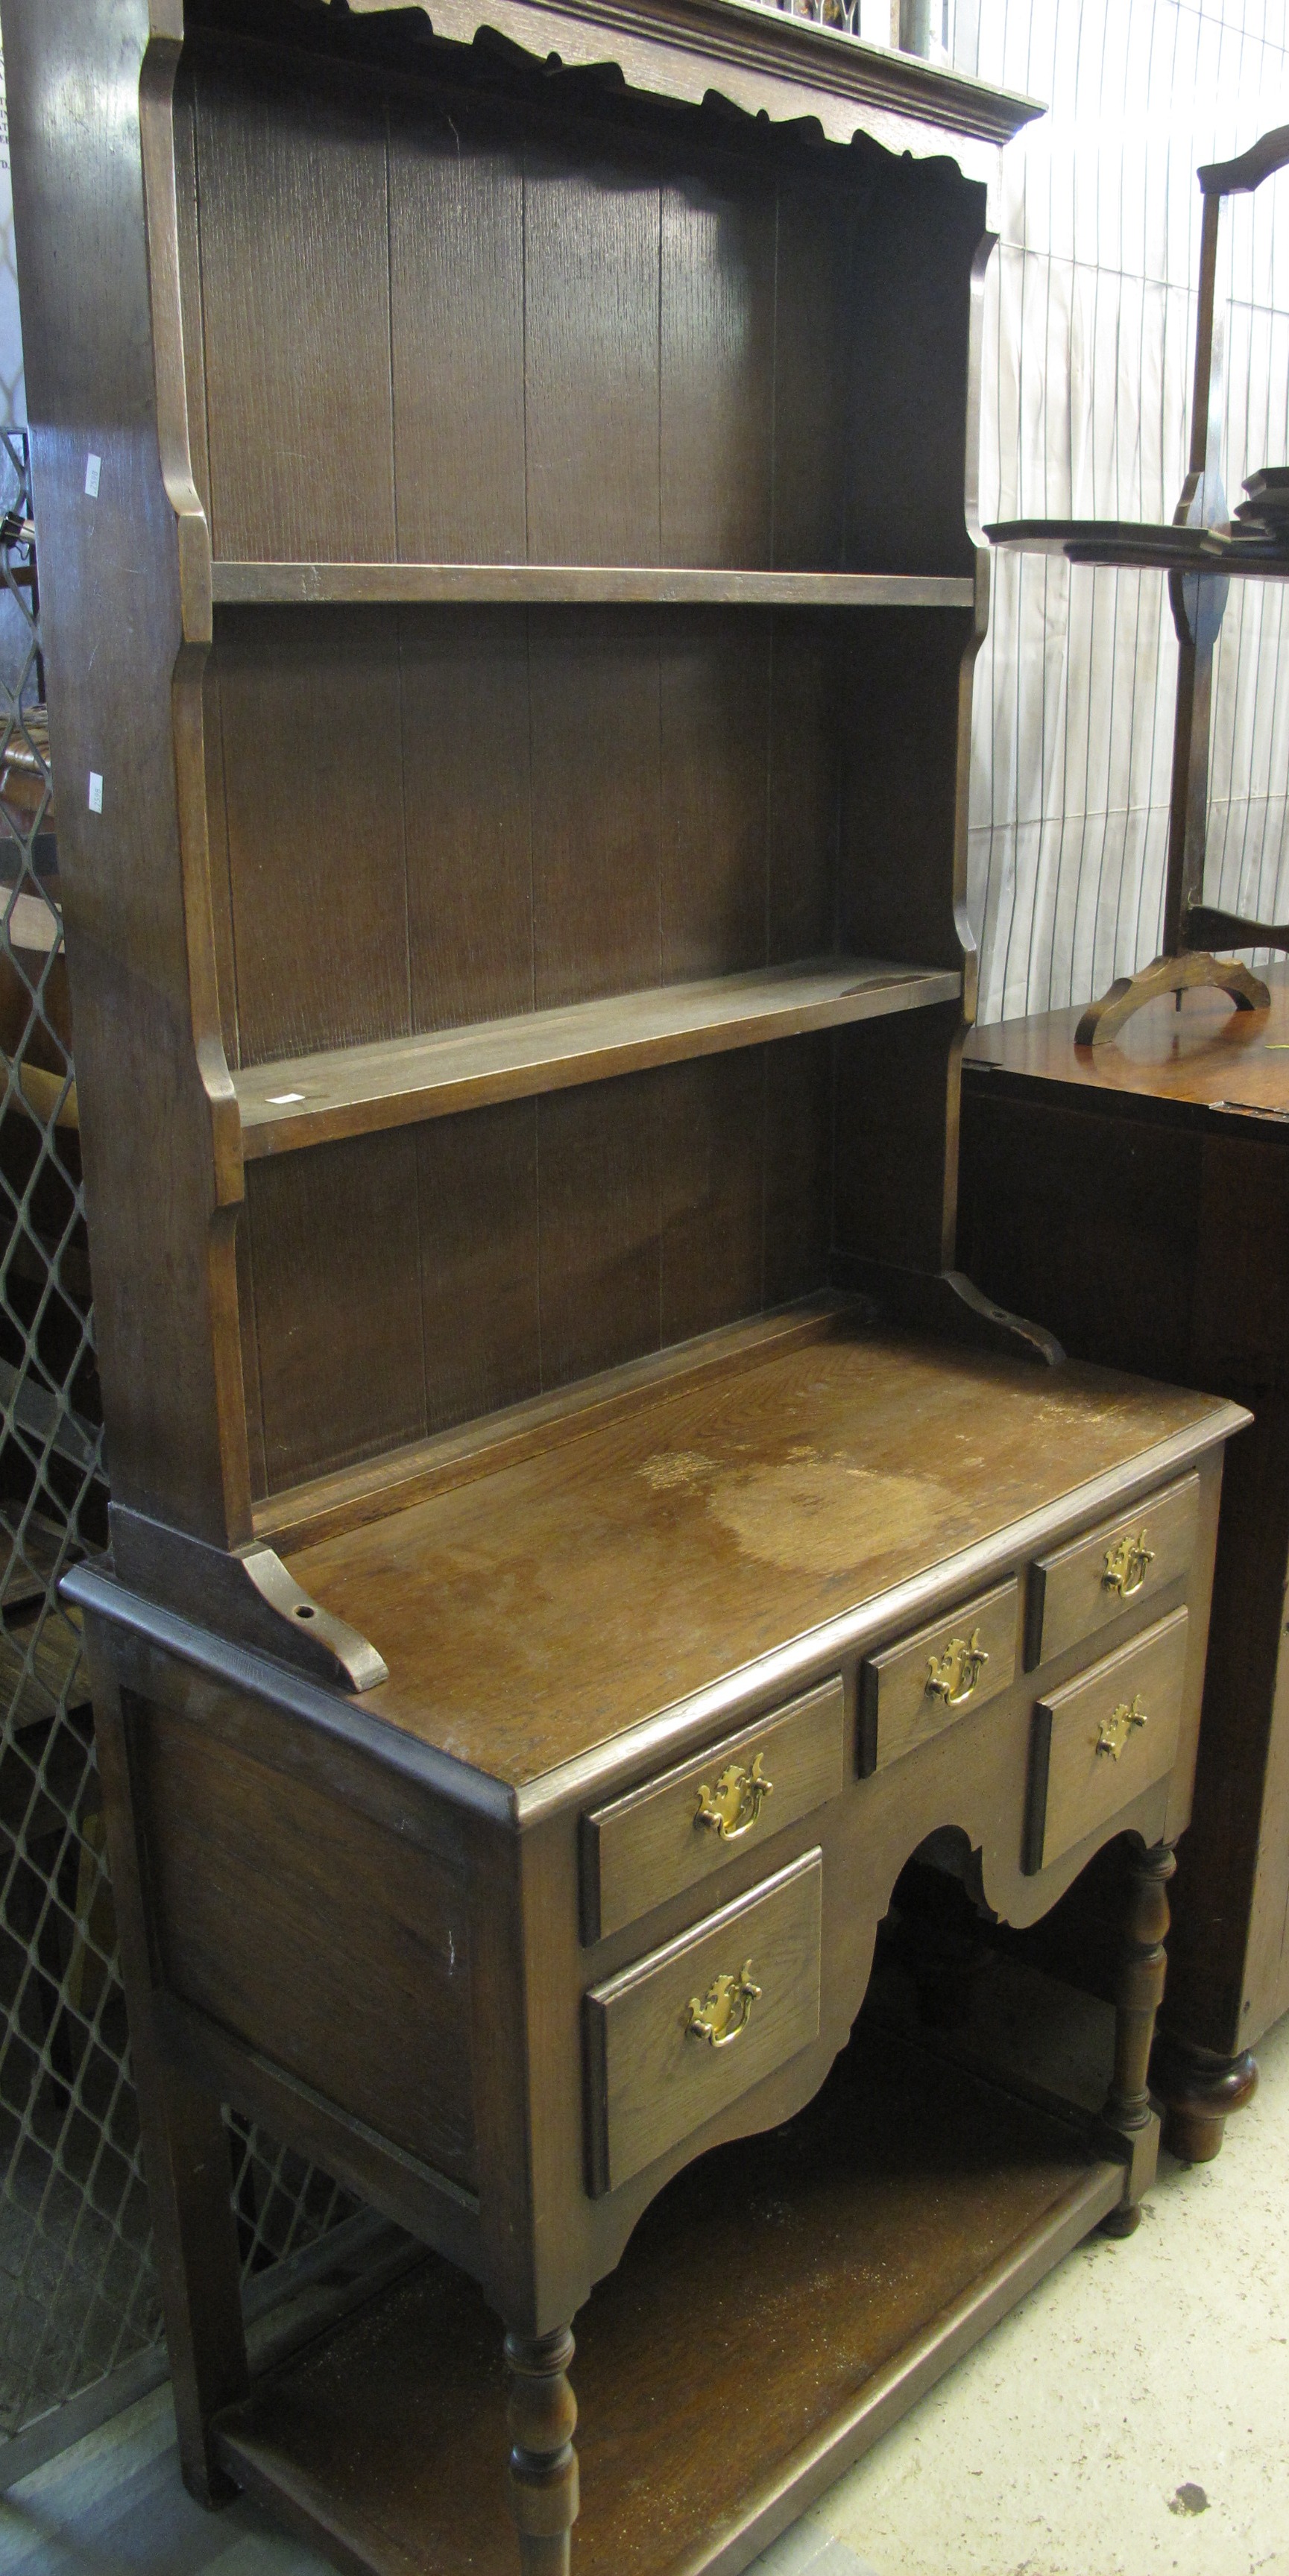 Small reproduction oak pot board dresser with boarded two shelf rack back.